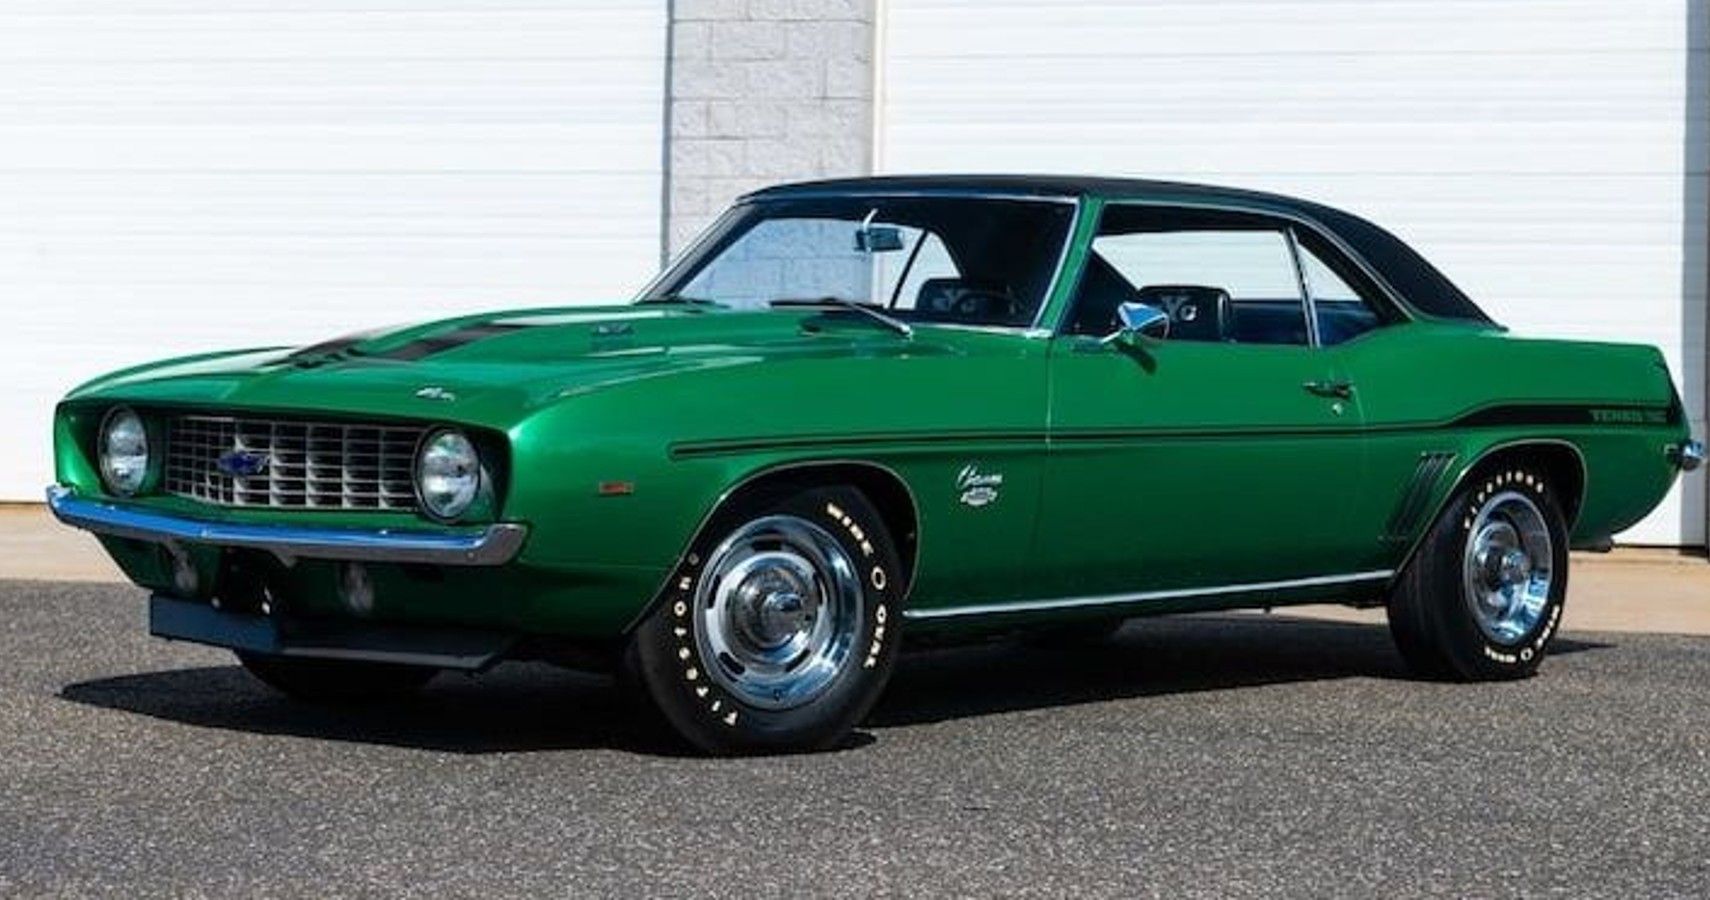 1969 Chevrolet Yenko Camaro (Green) - Front Right 